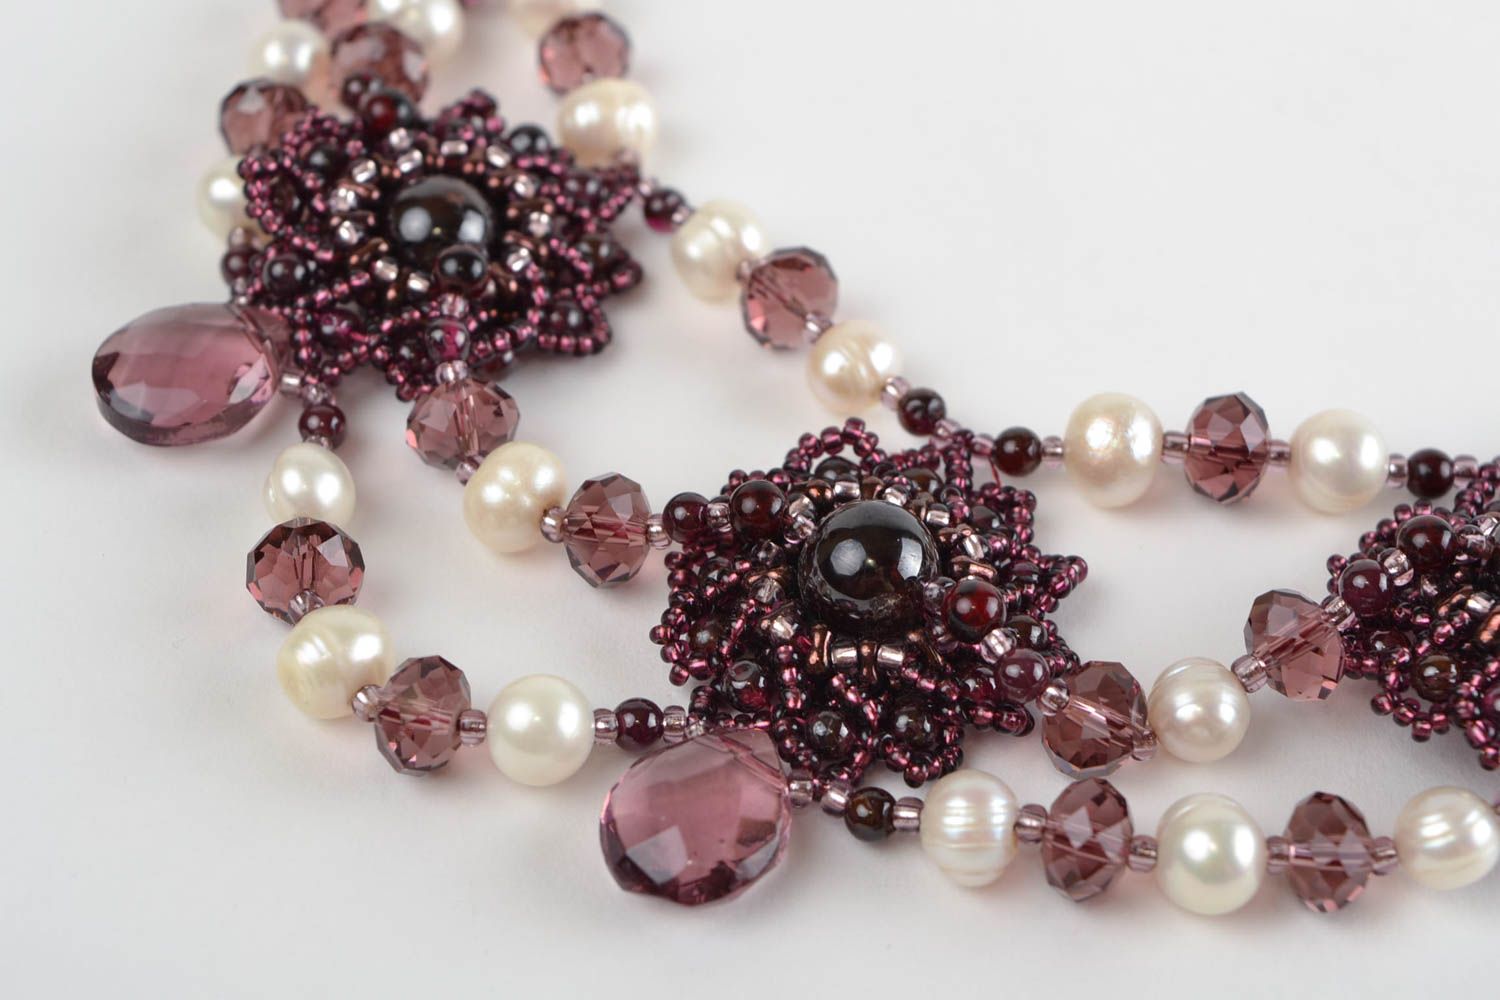 Handmade dark woven volume beaded women's designer necklace with natural stones photo 4